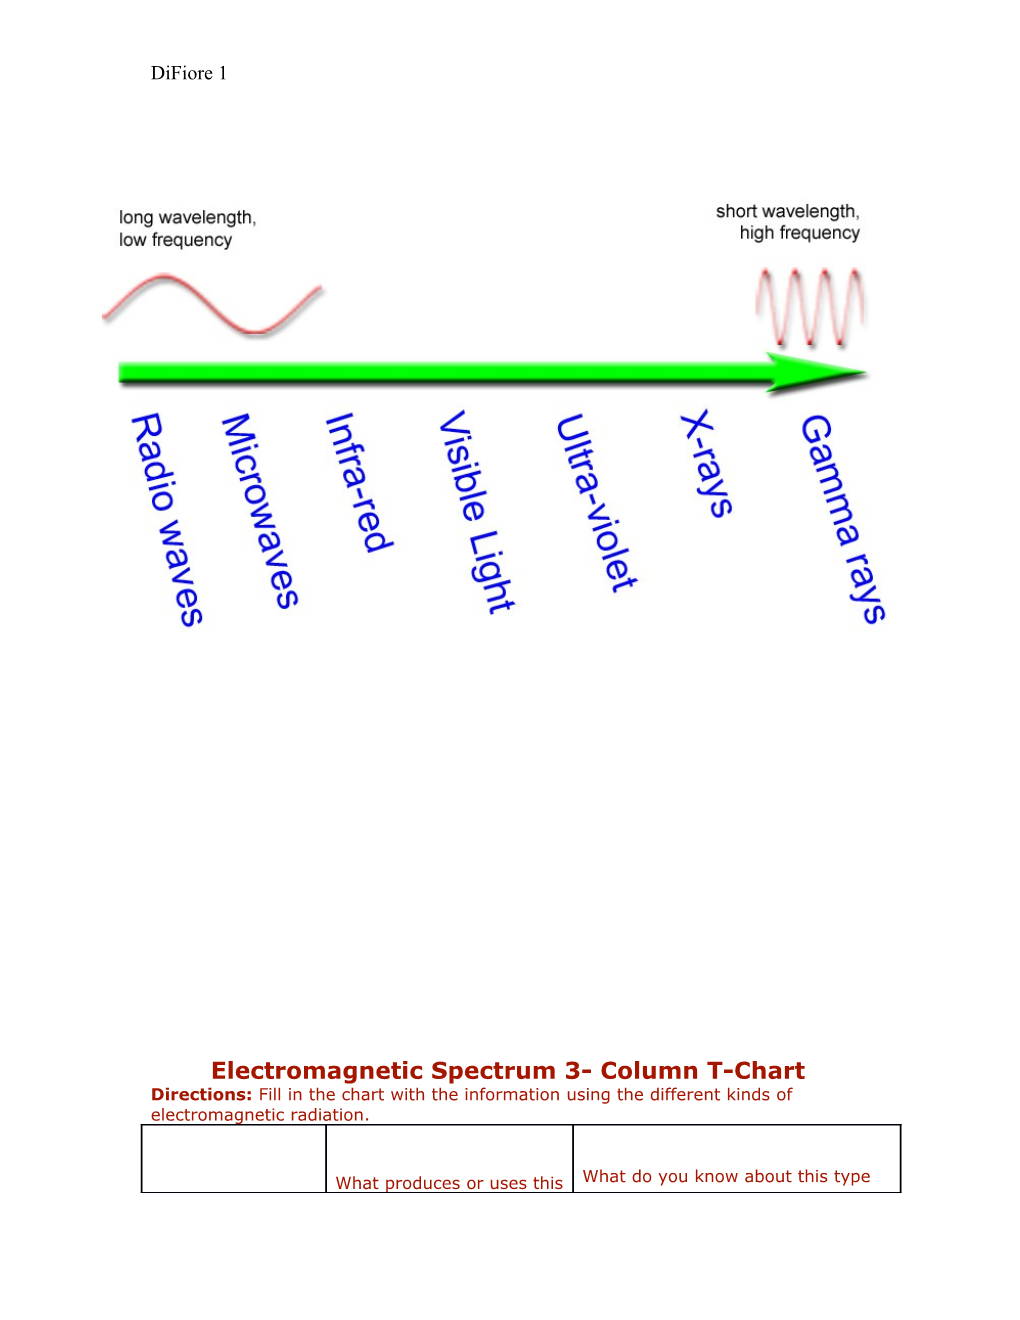 Electromagnetic Spectrum 3- Column T-Chart